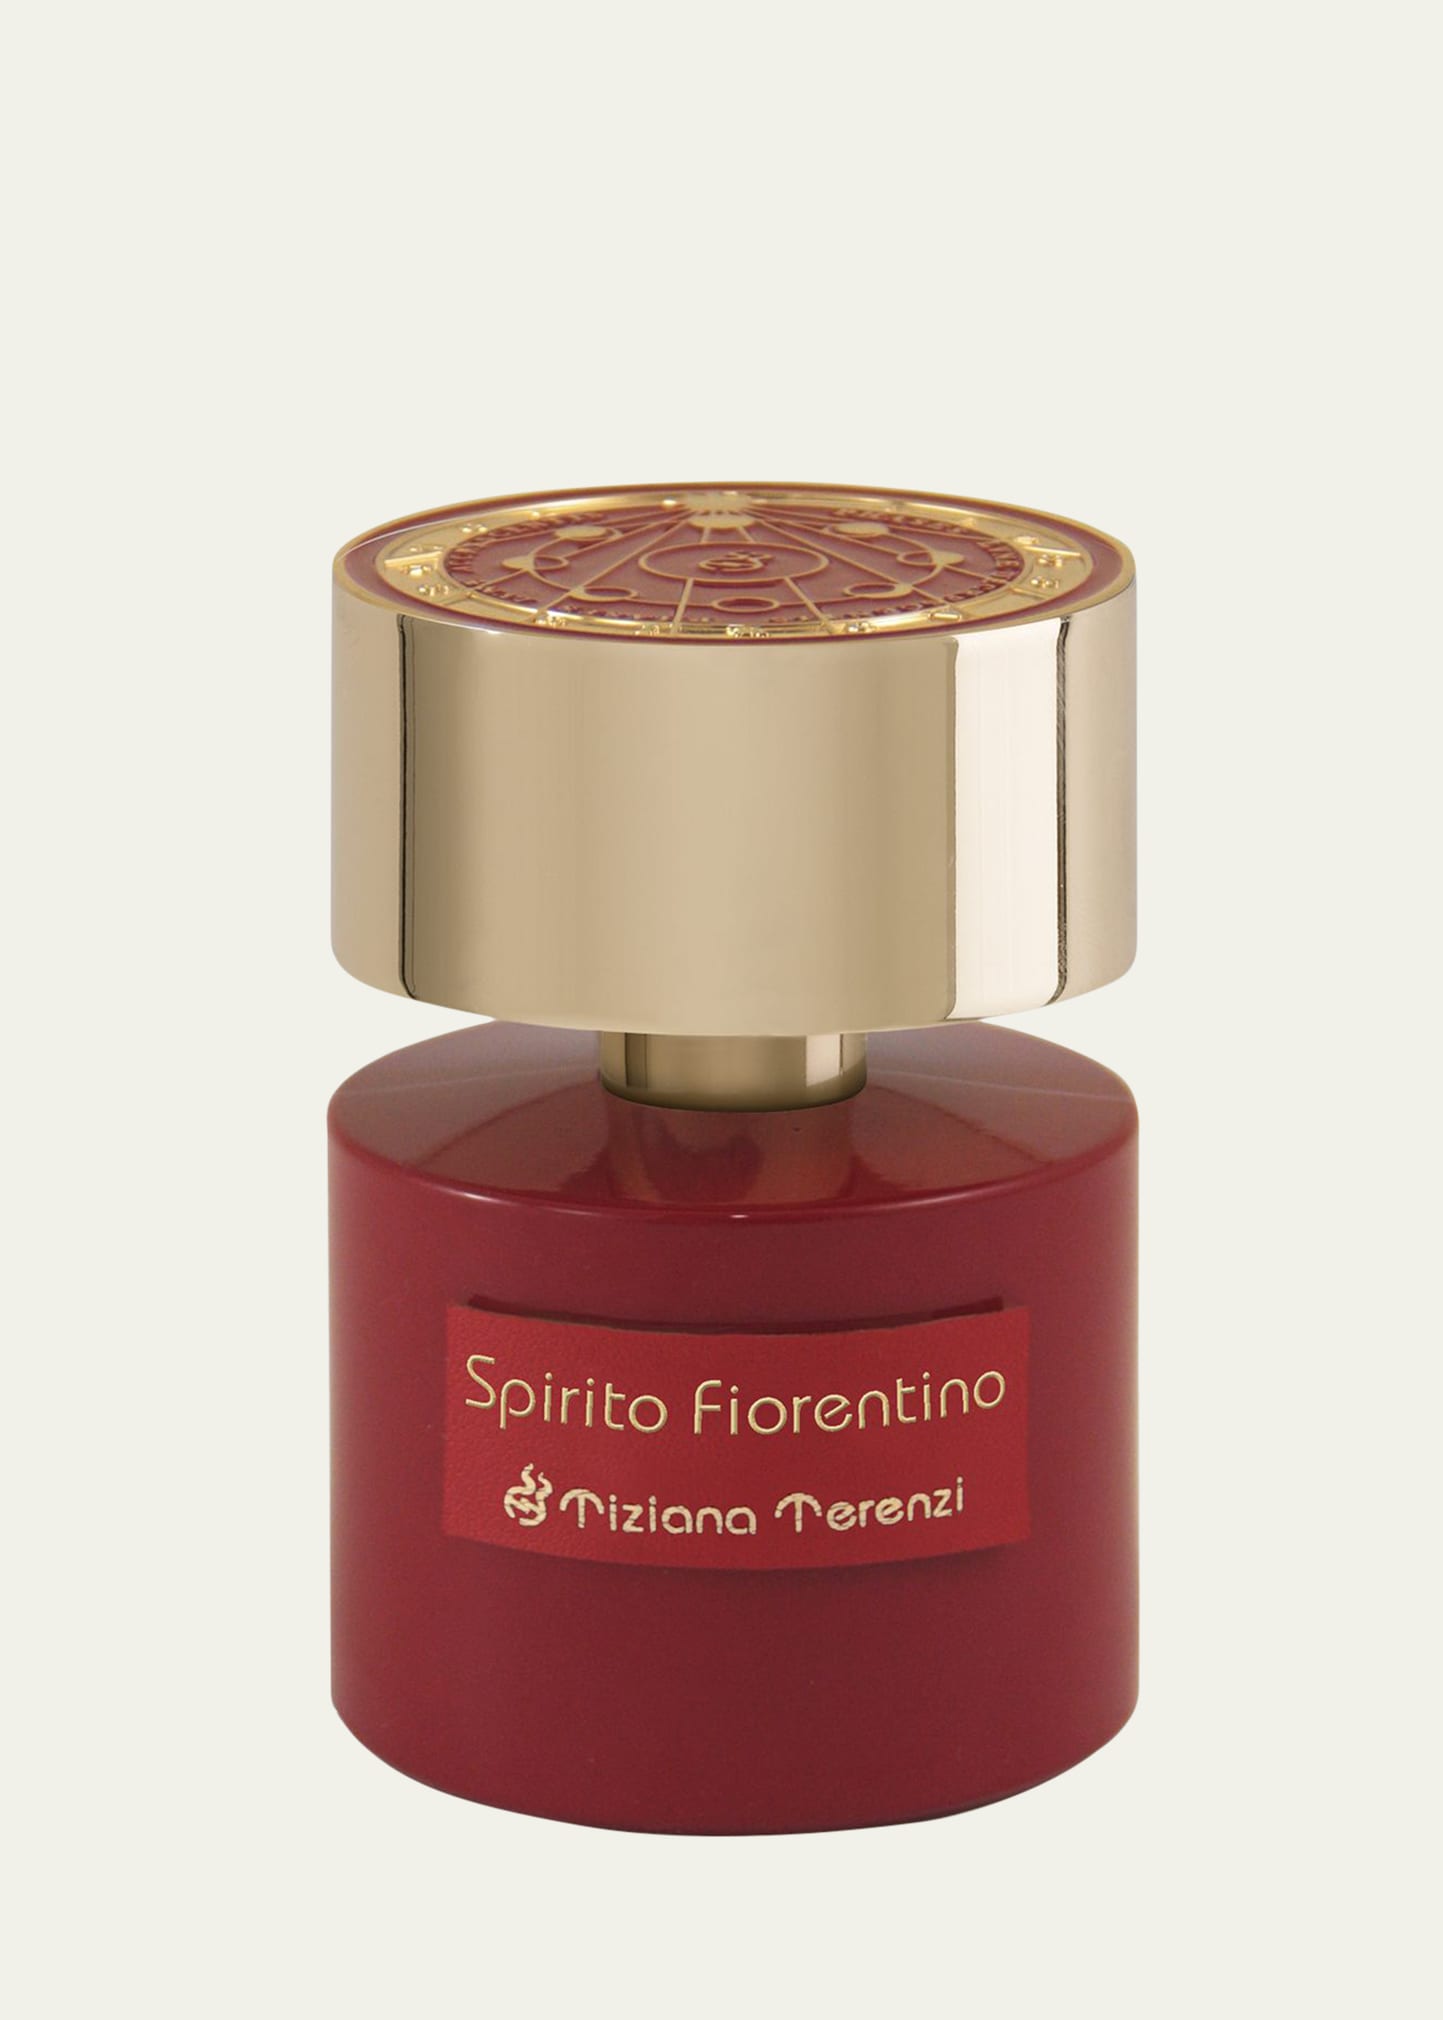 Spirito Fiorentino Extrait de Parfum, 3.4 oz.